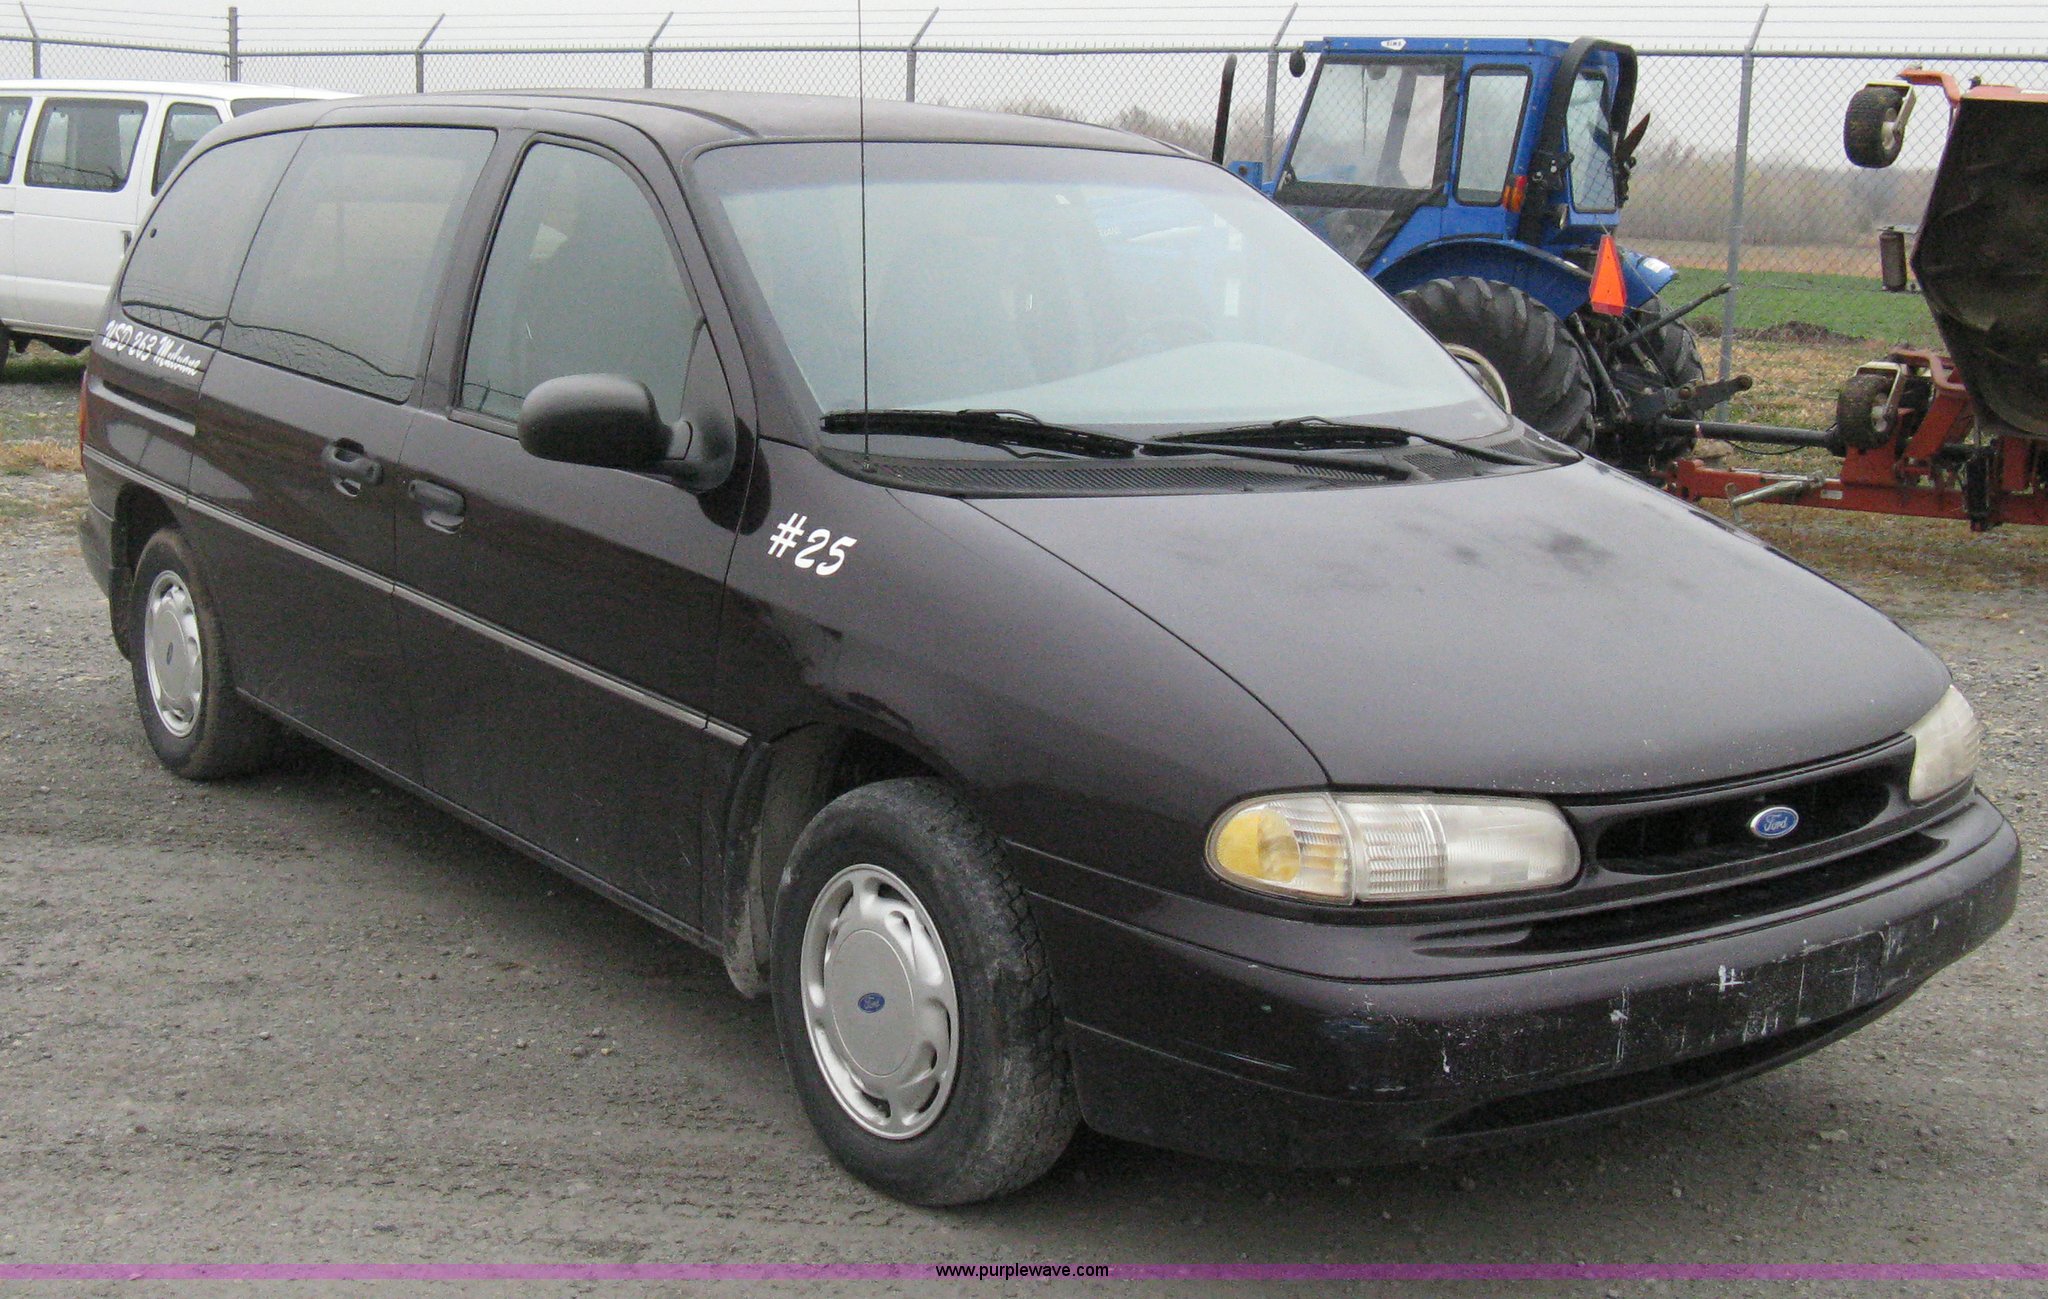 1997 Ford Windstar six-passenger mini van in Mulvane, KS | Item A4479 sold  | Purple Wave